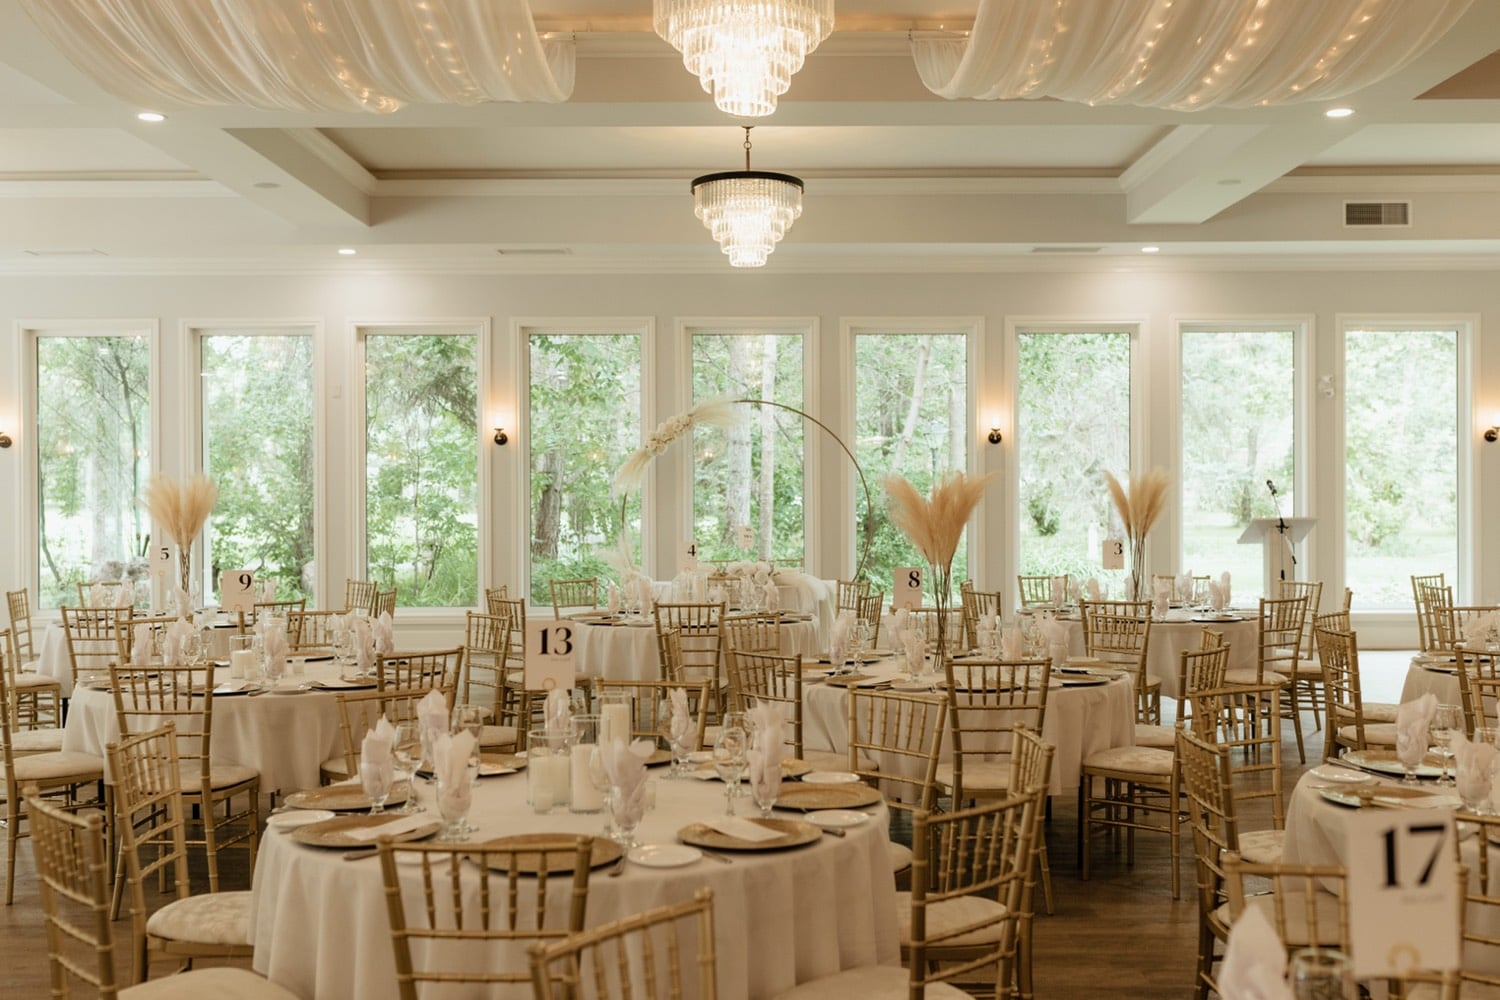 Indoor wedding venue decorated with tables